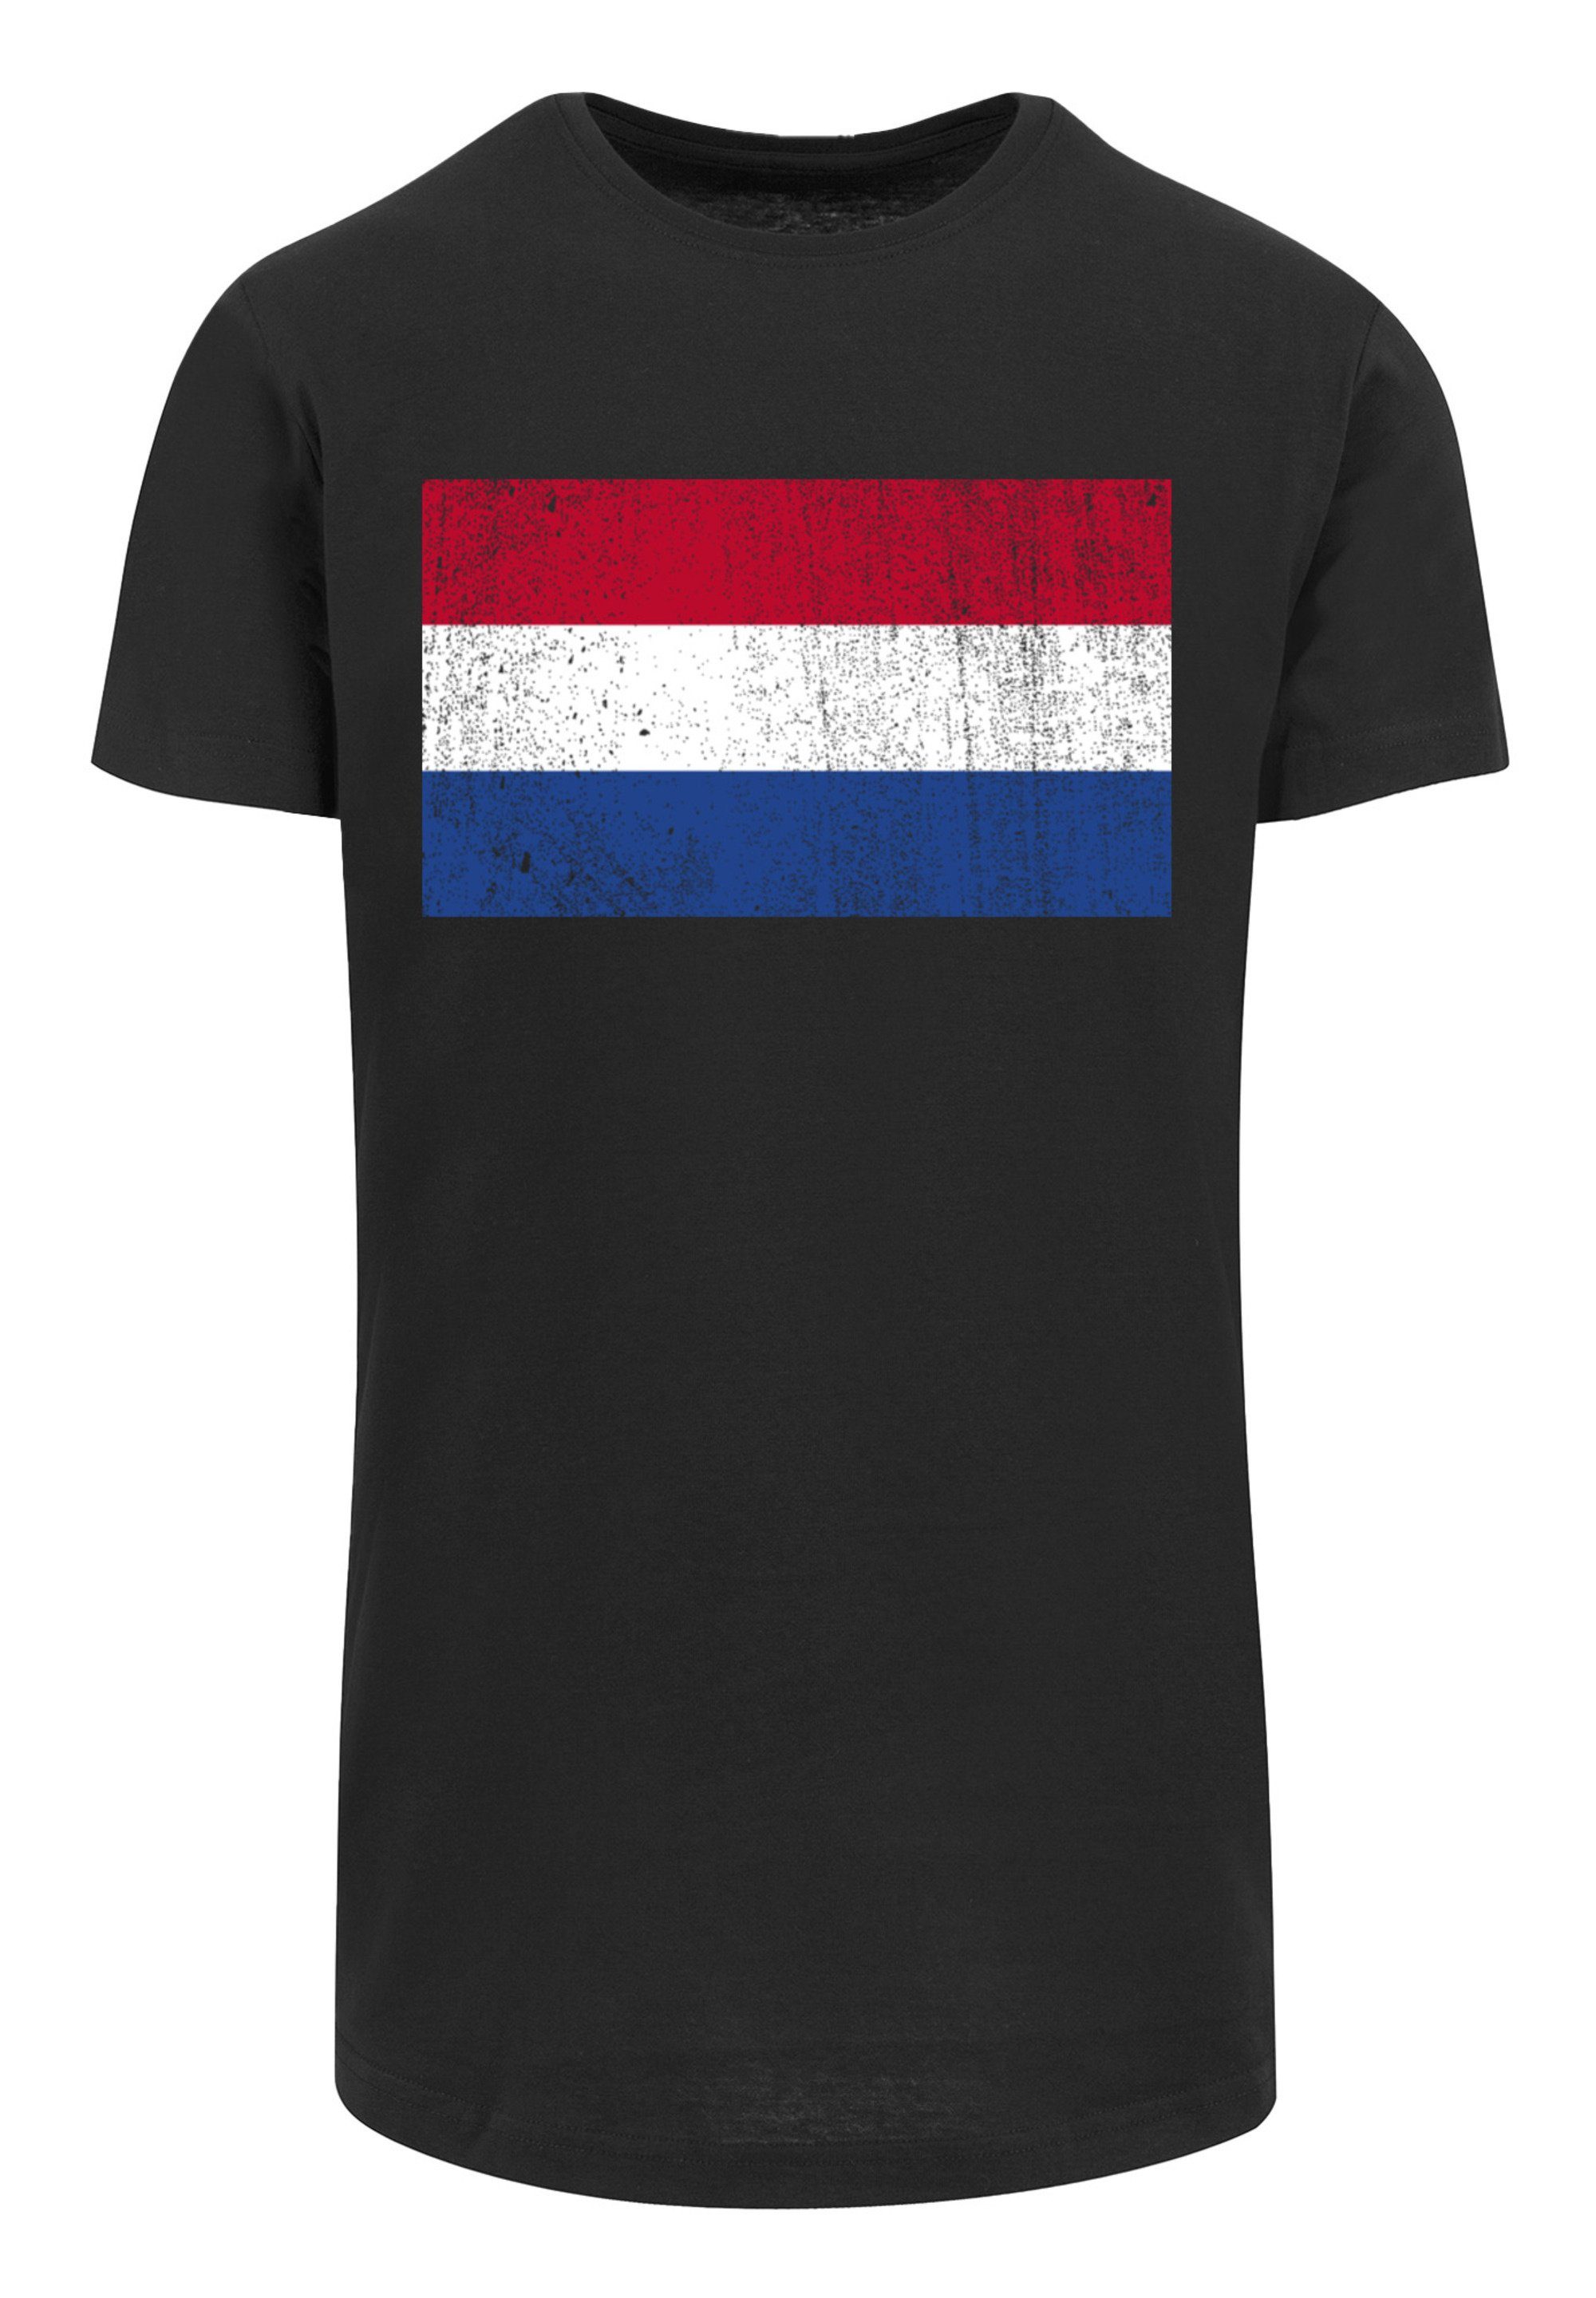 schwarz T-Shirt distressed Flagge Print Holland Netherlands NIederlande F4NT4STIC